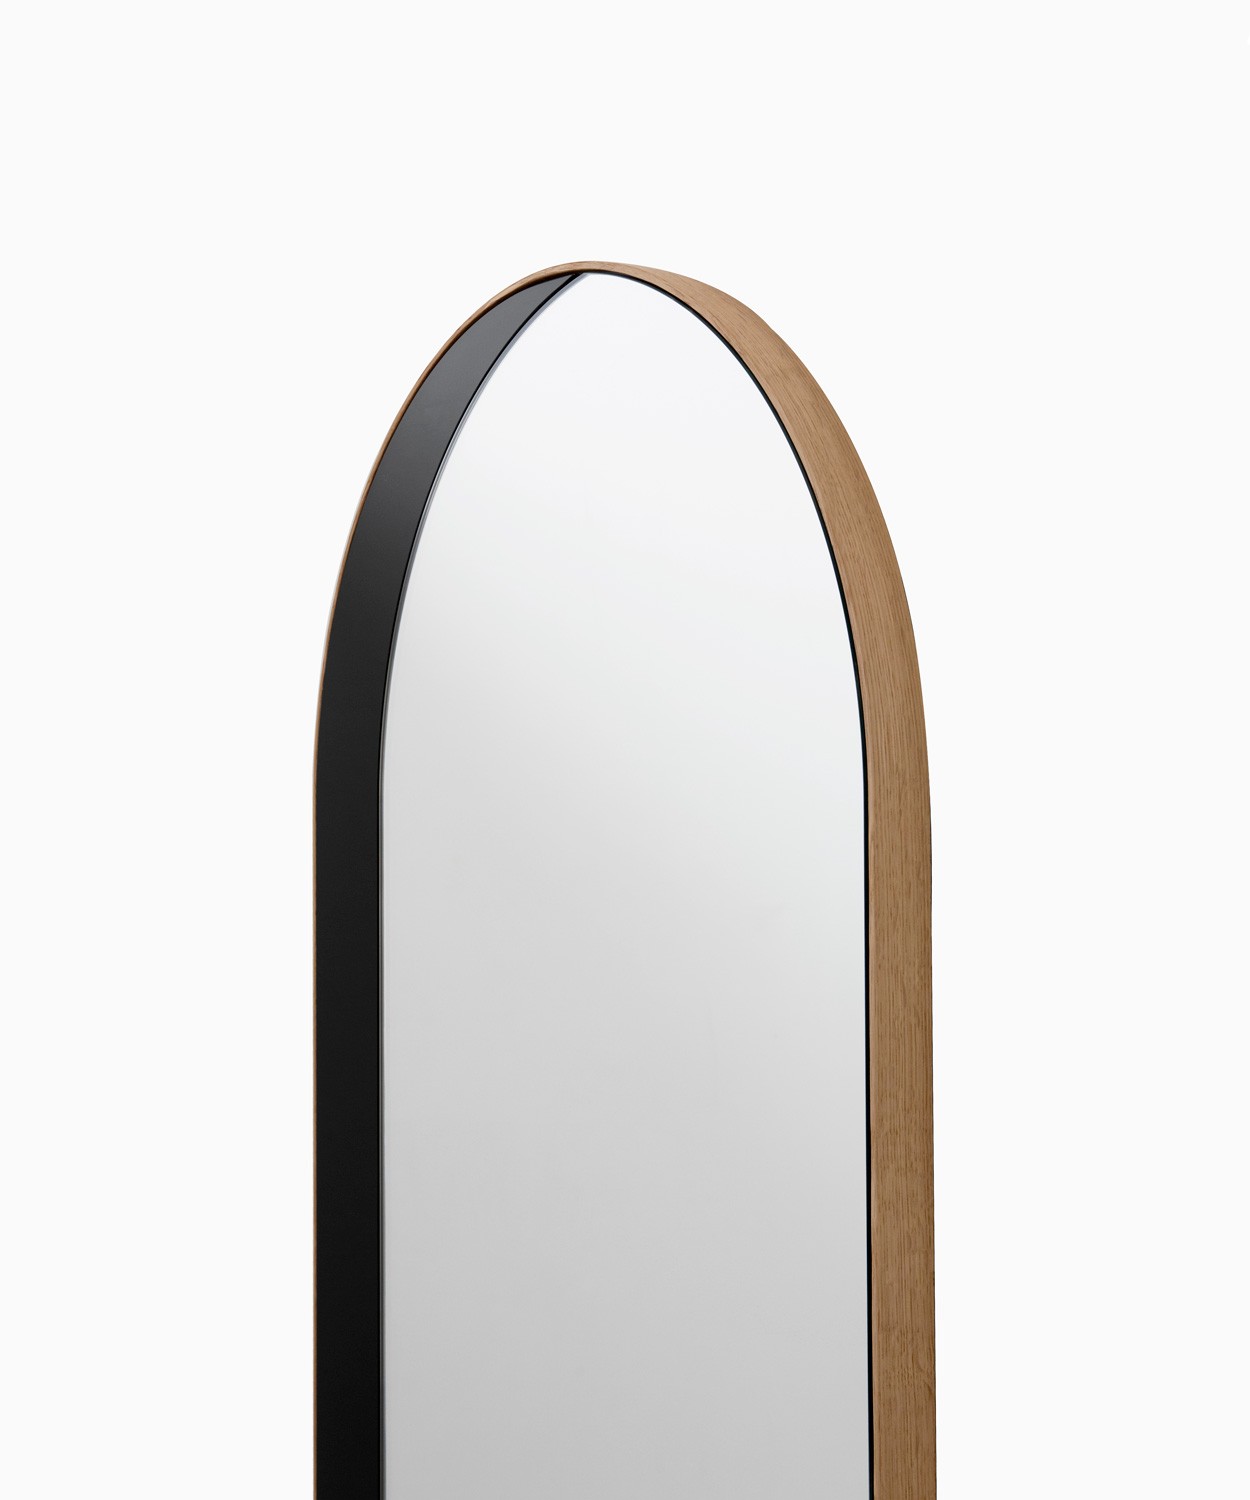 Slim Archway Mirror by Bower